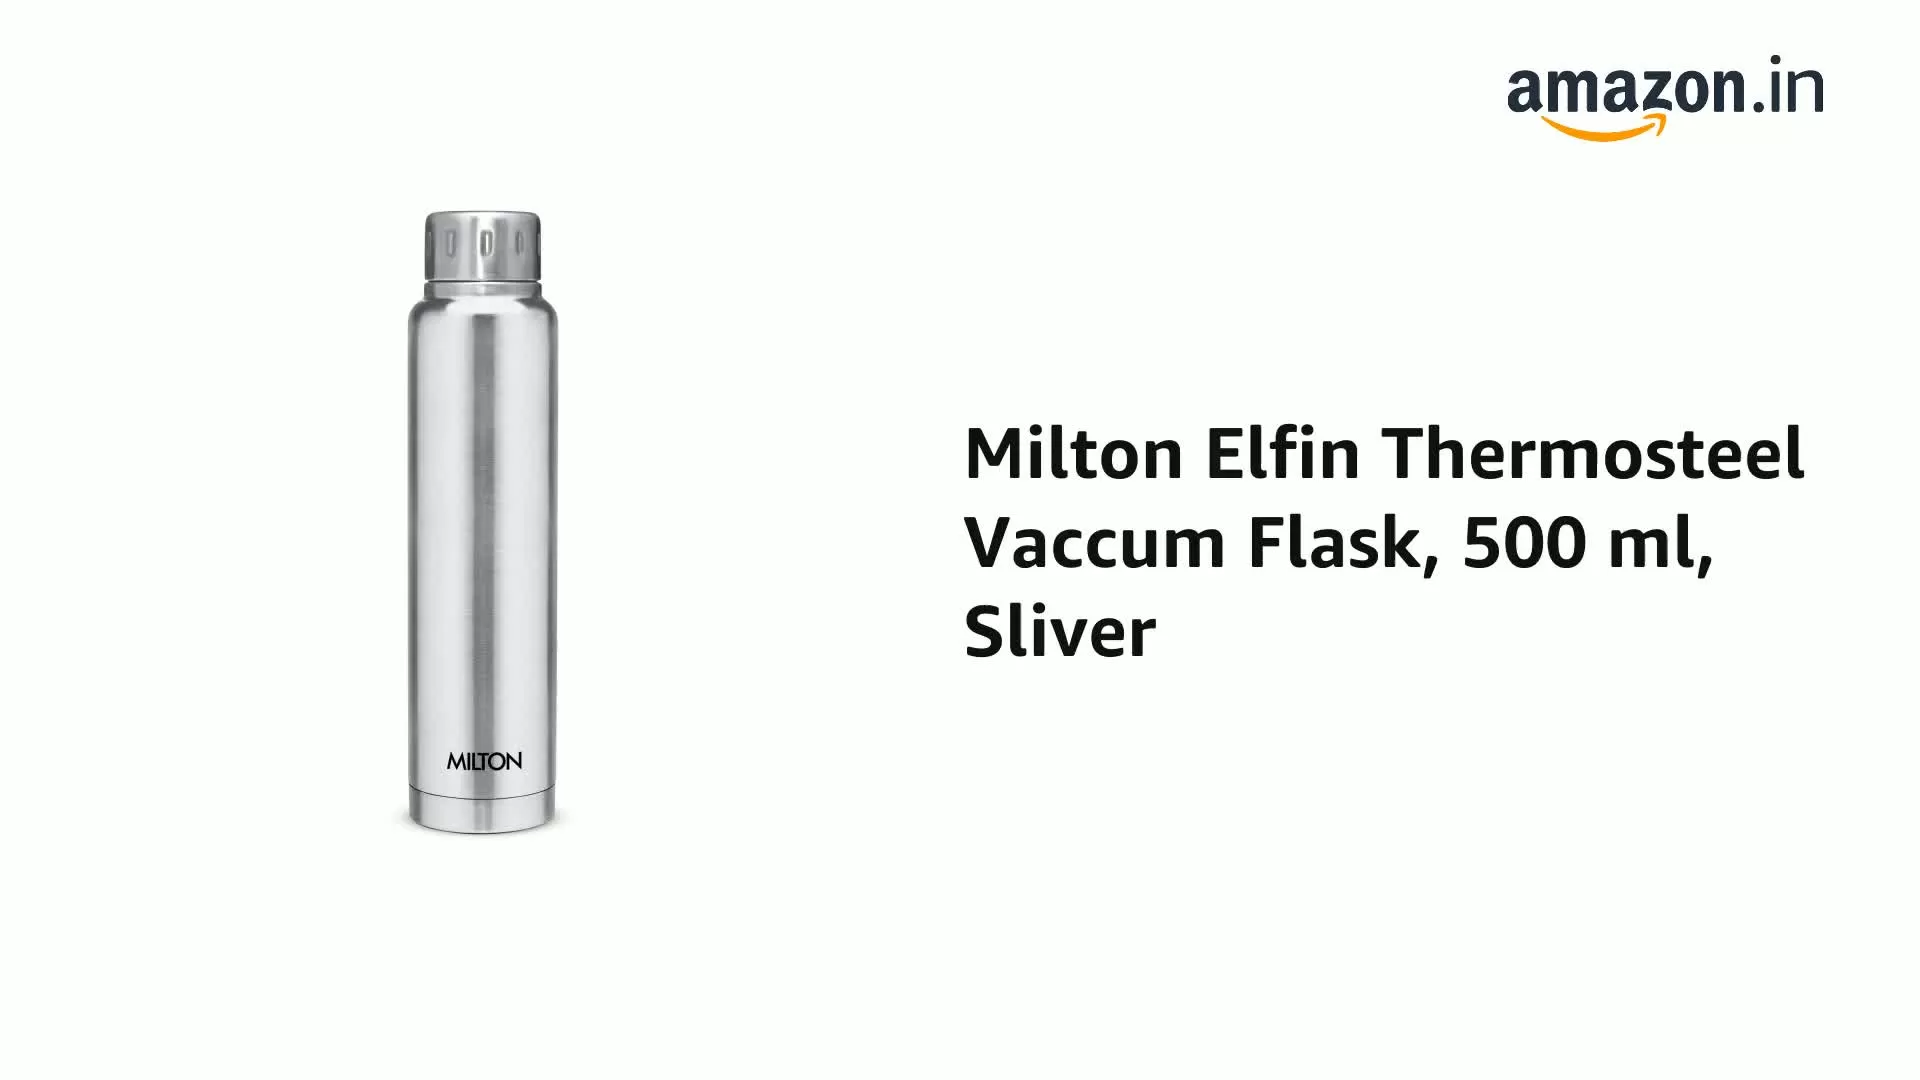 MILTON Elfin Thermosteel Vaccum Flask 500 ml Slivr, 2 image